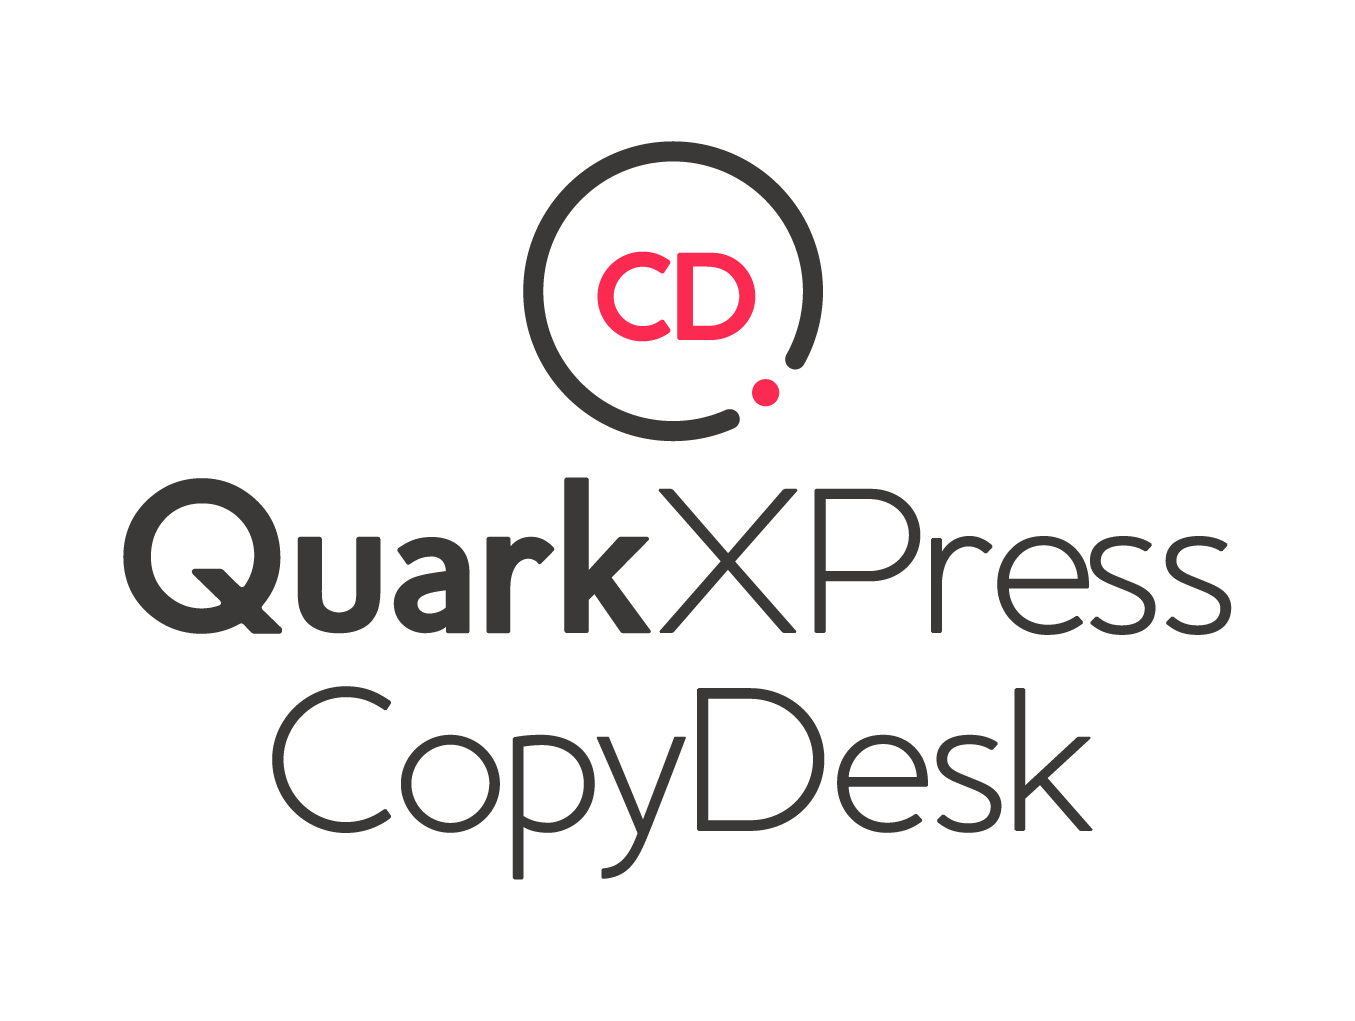 quark express 2021